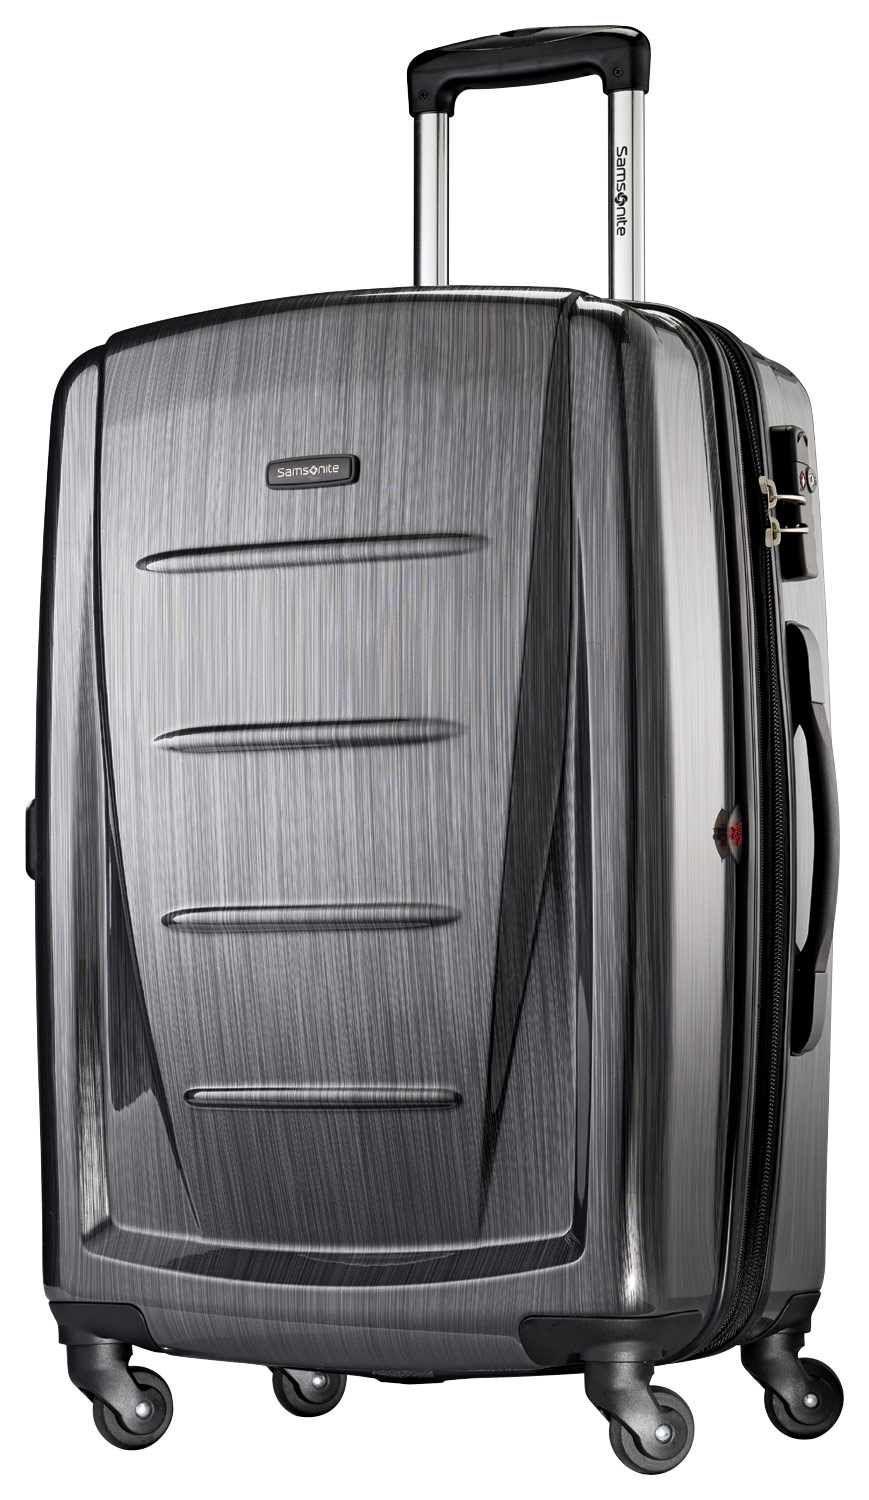 Samsonite - Winfield 2 24" Hardside Spinner Suitcase - Charcoal